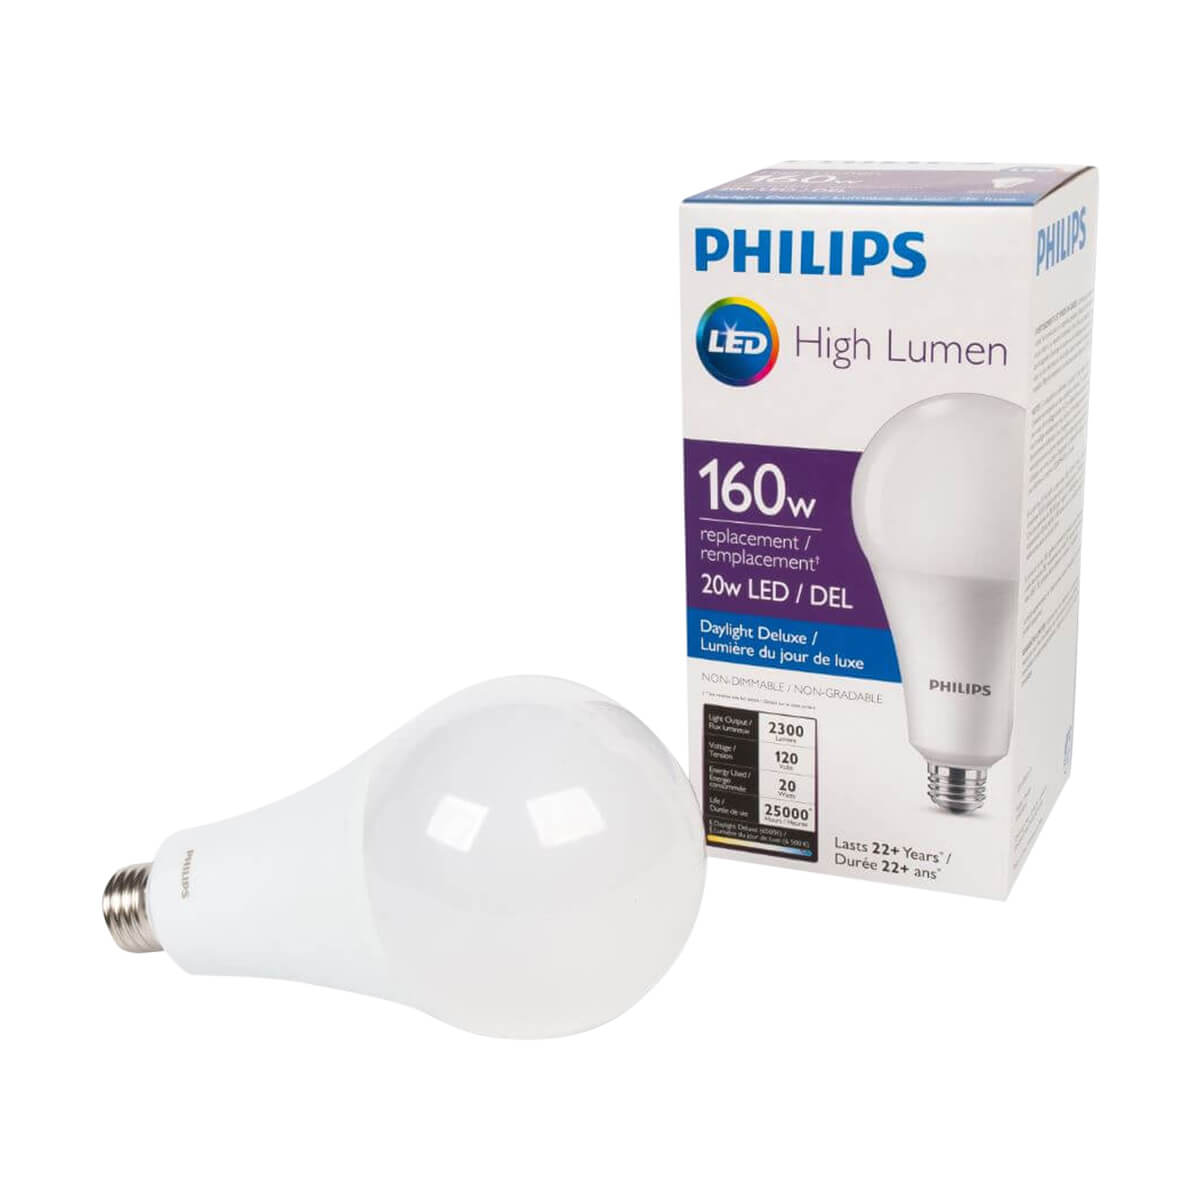 Phillips 160W / 20W Equivalent LED High Lumen Bulb